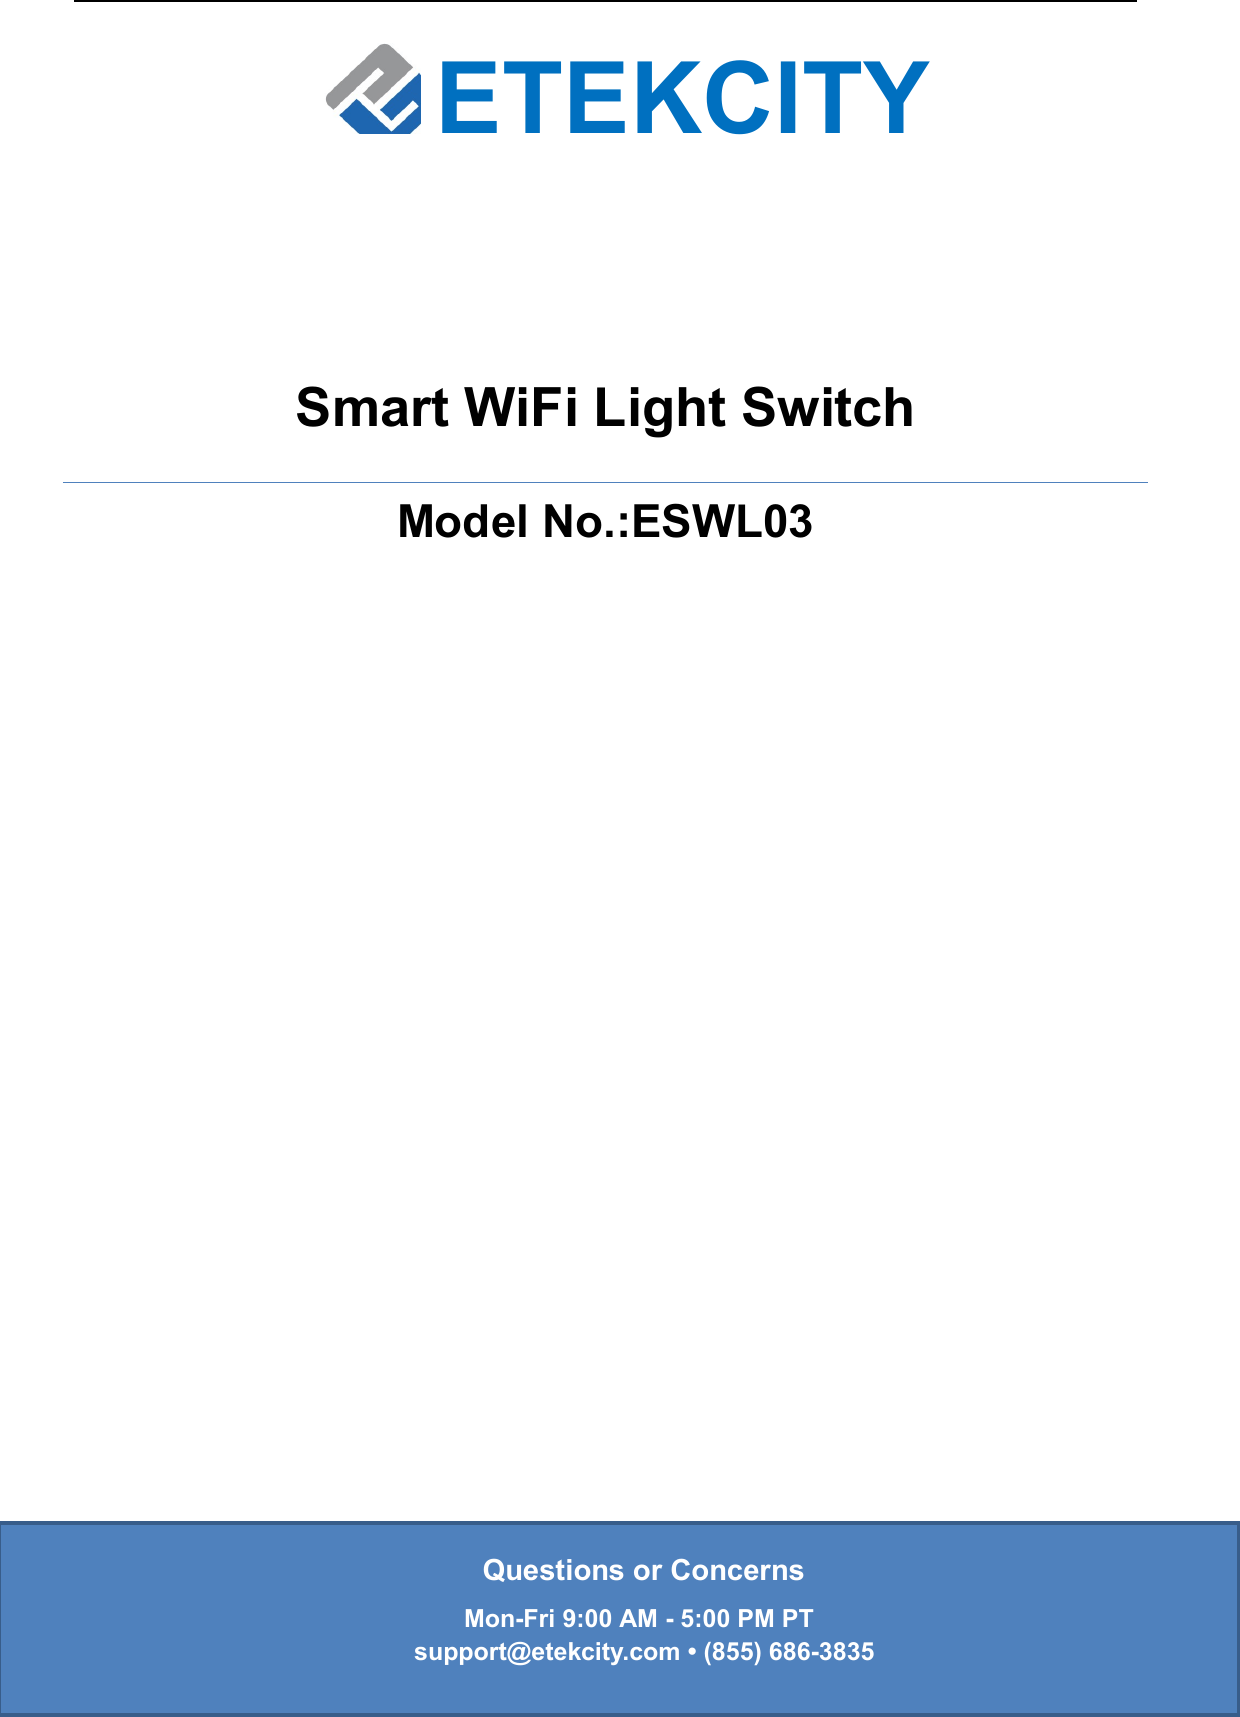 ETEKCITYSmart WiFi Light SwitchModel No.:ESWL03Questions or ConcernsMon-Fri 9:00 AM - 5:00 PM PTsupport@etekcity.com • (855) 686-3835